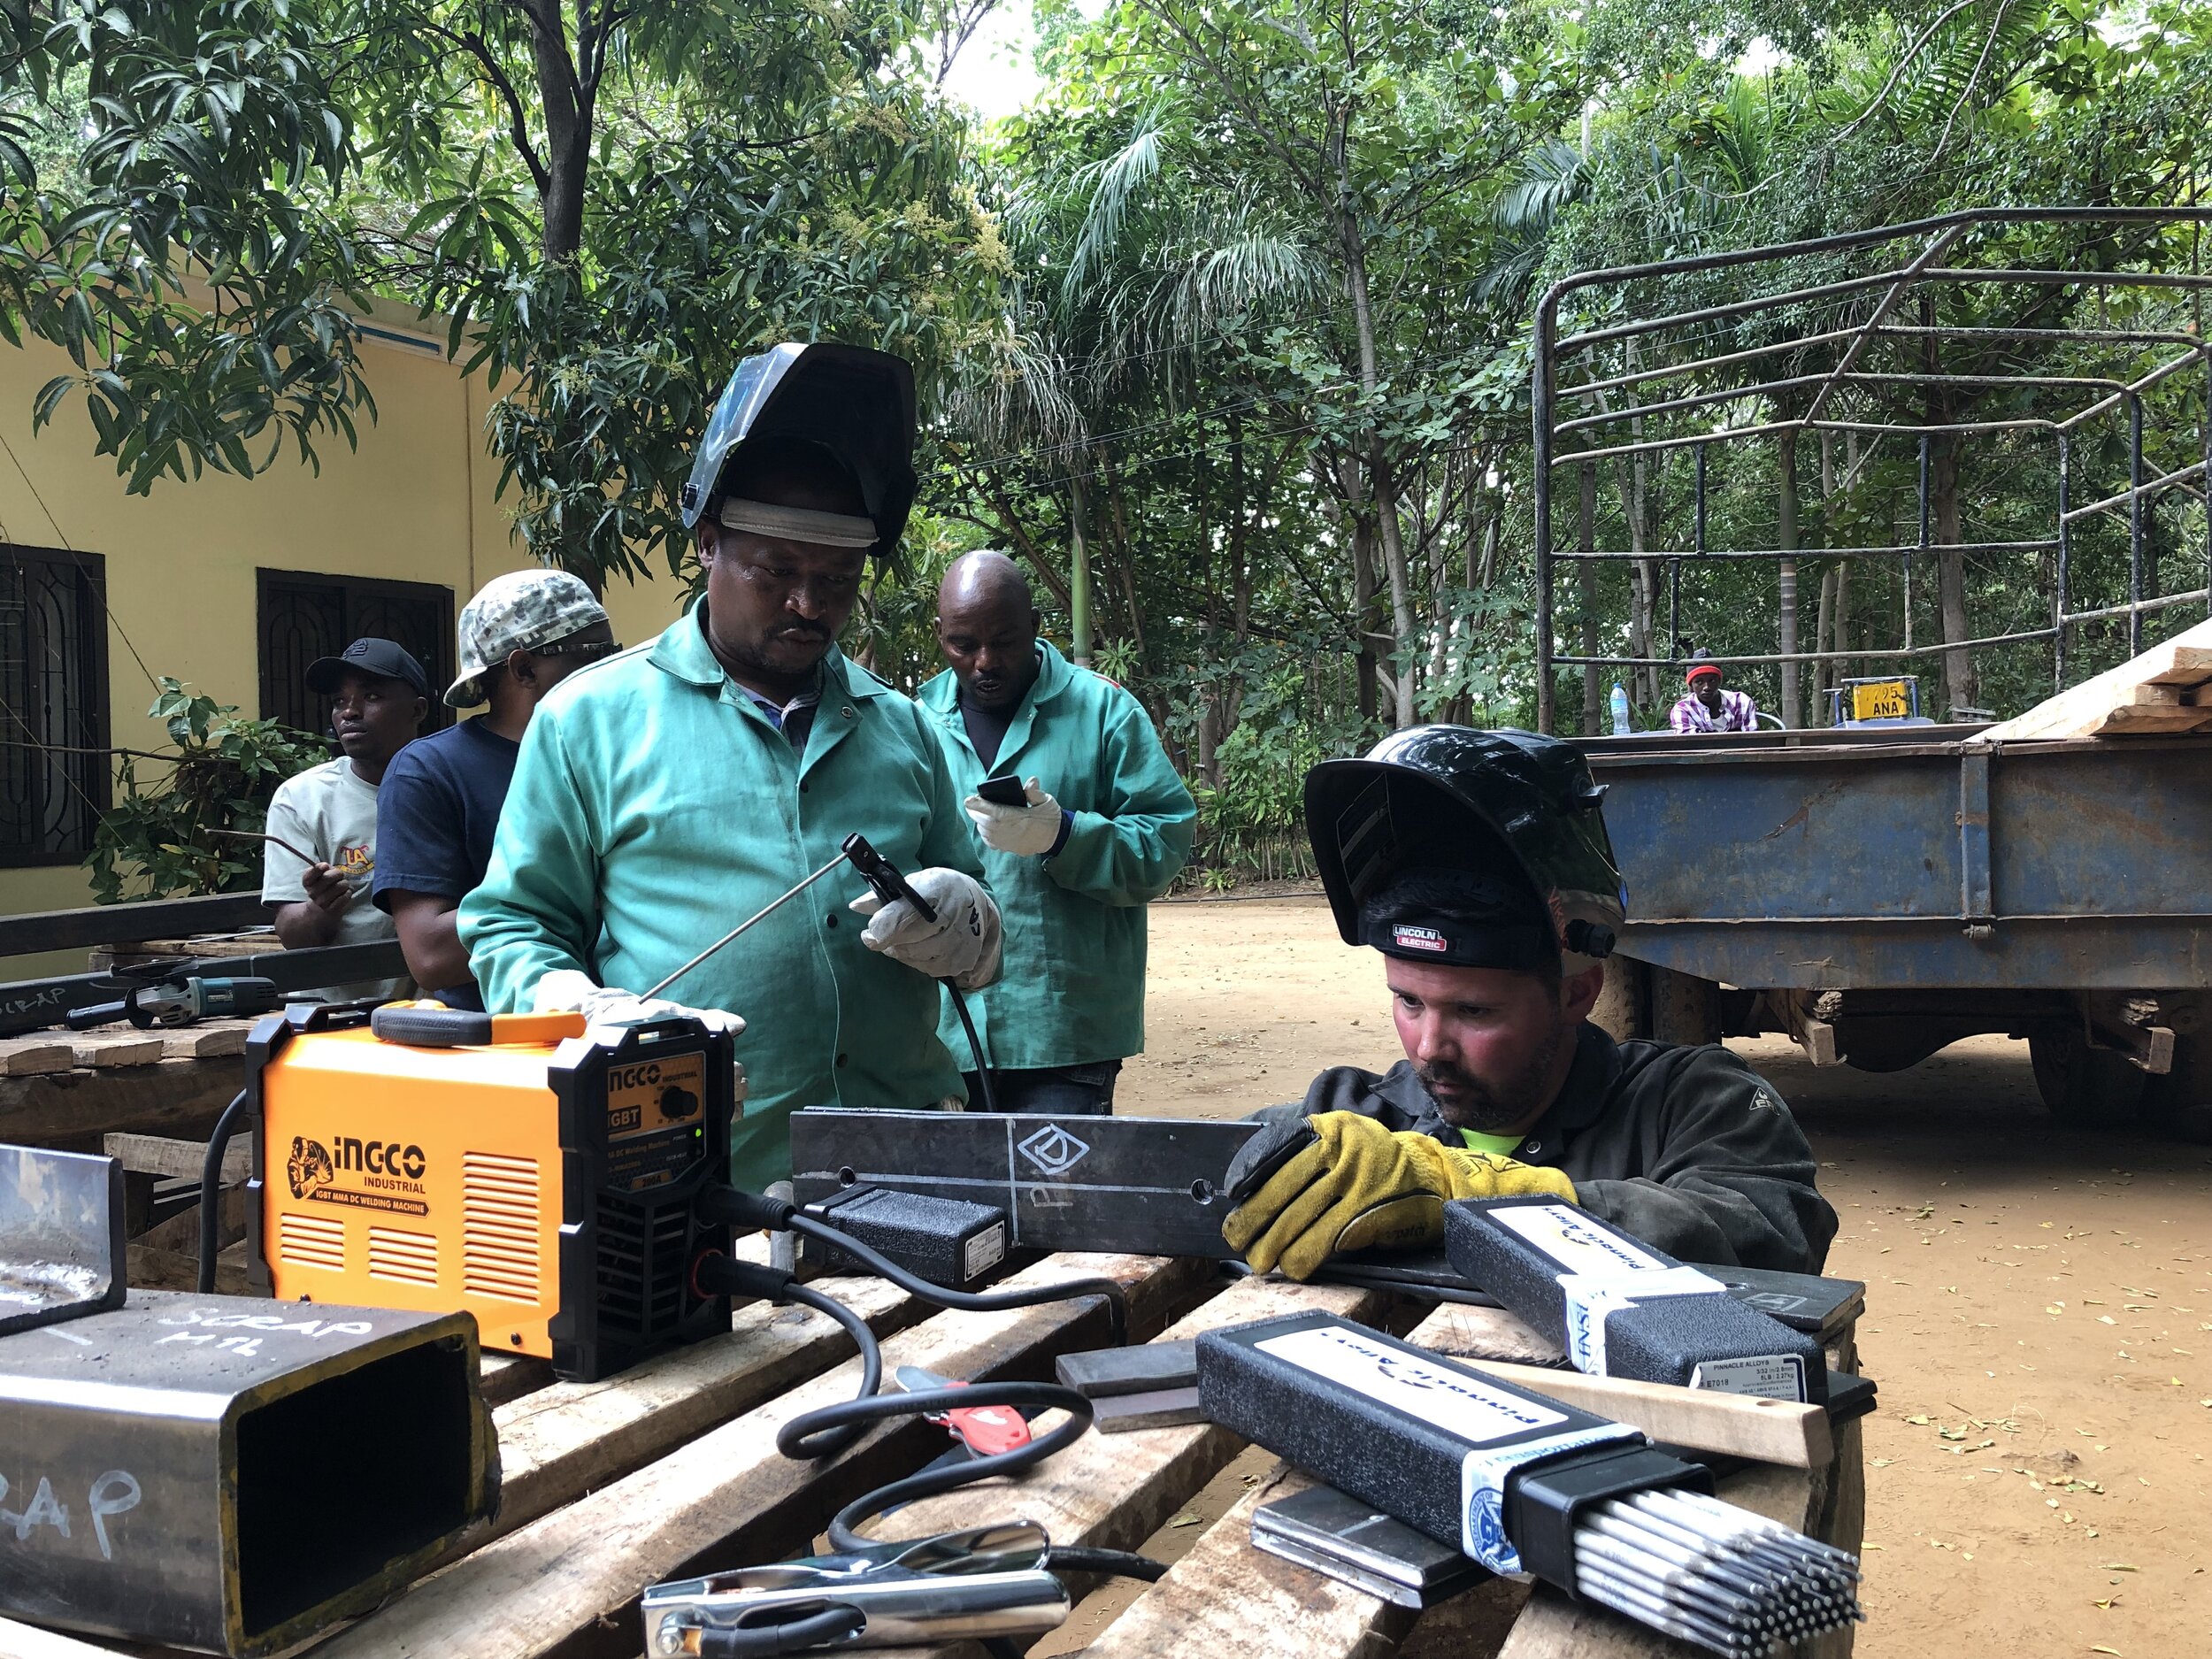 Mbesese build team member Ezekiel (left) and volunteer Rickey (right) prepare to begin welding